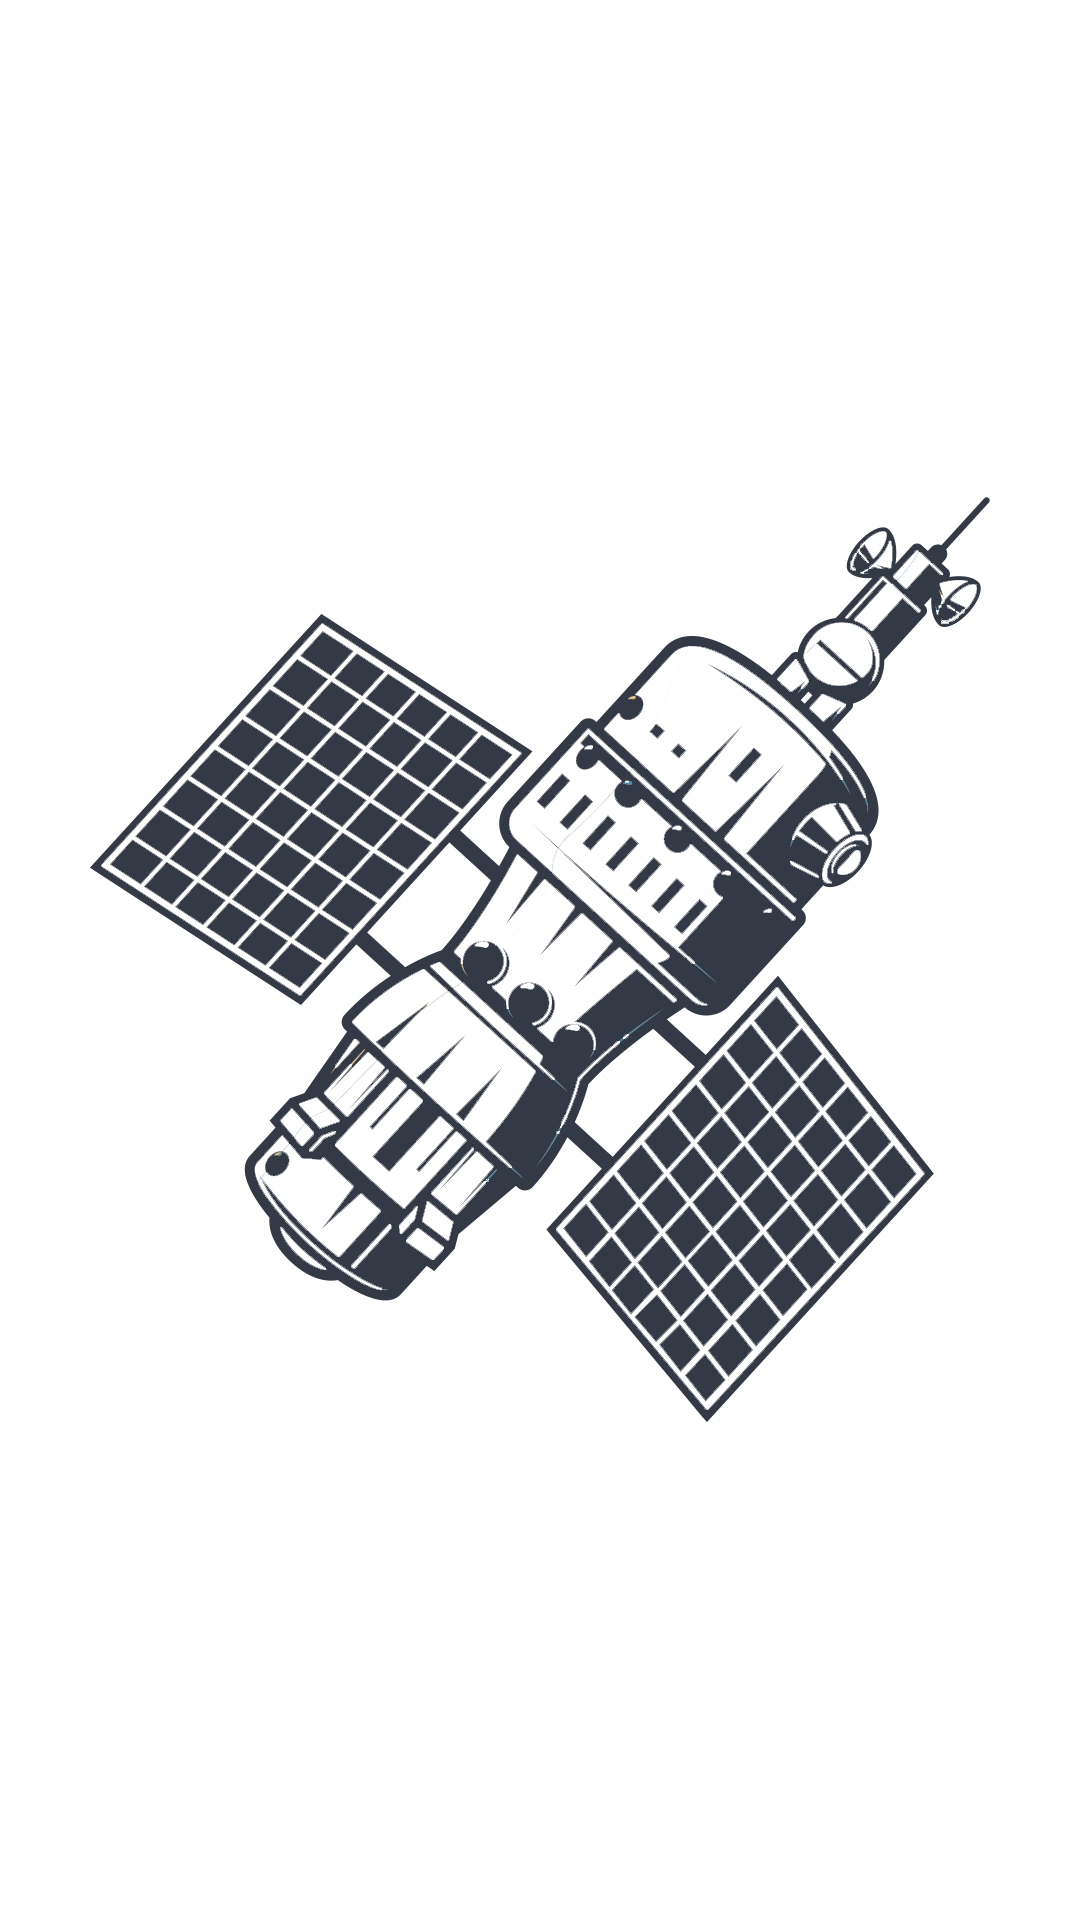 Space Satellite Coloring Sheet